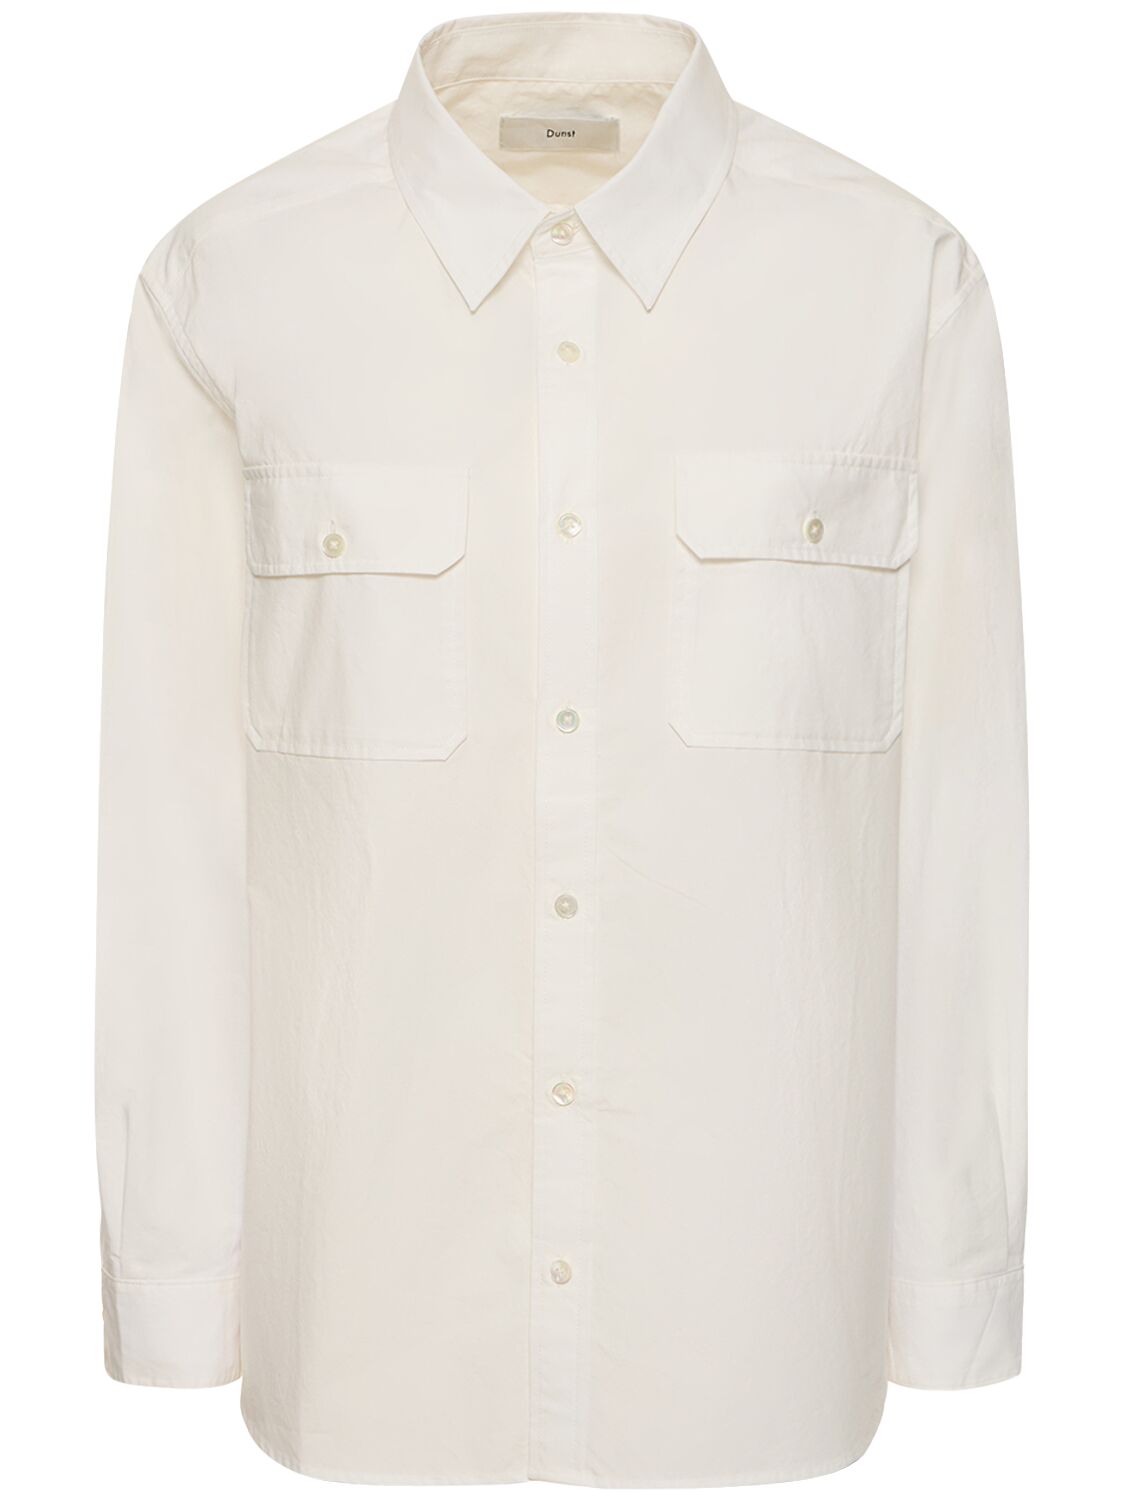 Out Pocket Cotton Shirt - DUNST - Modalova